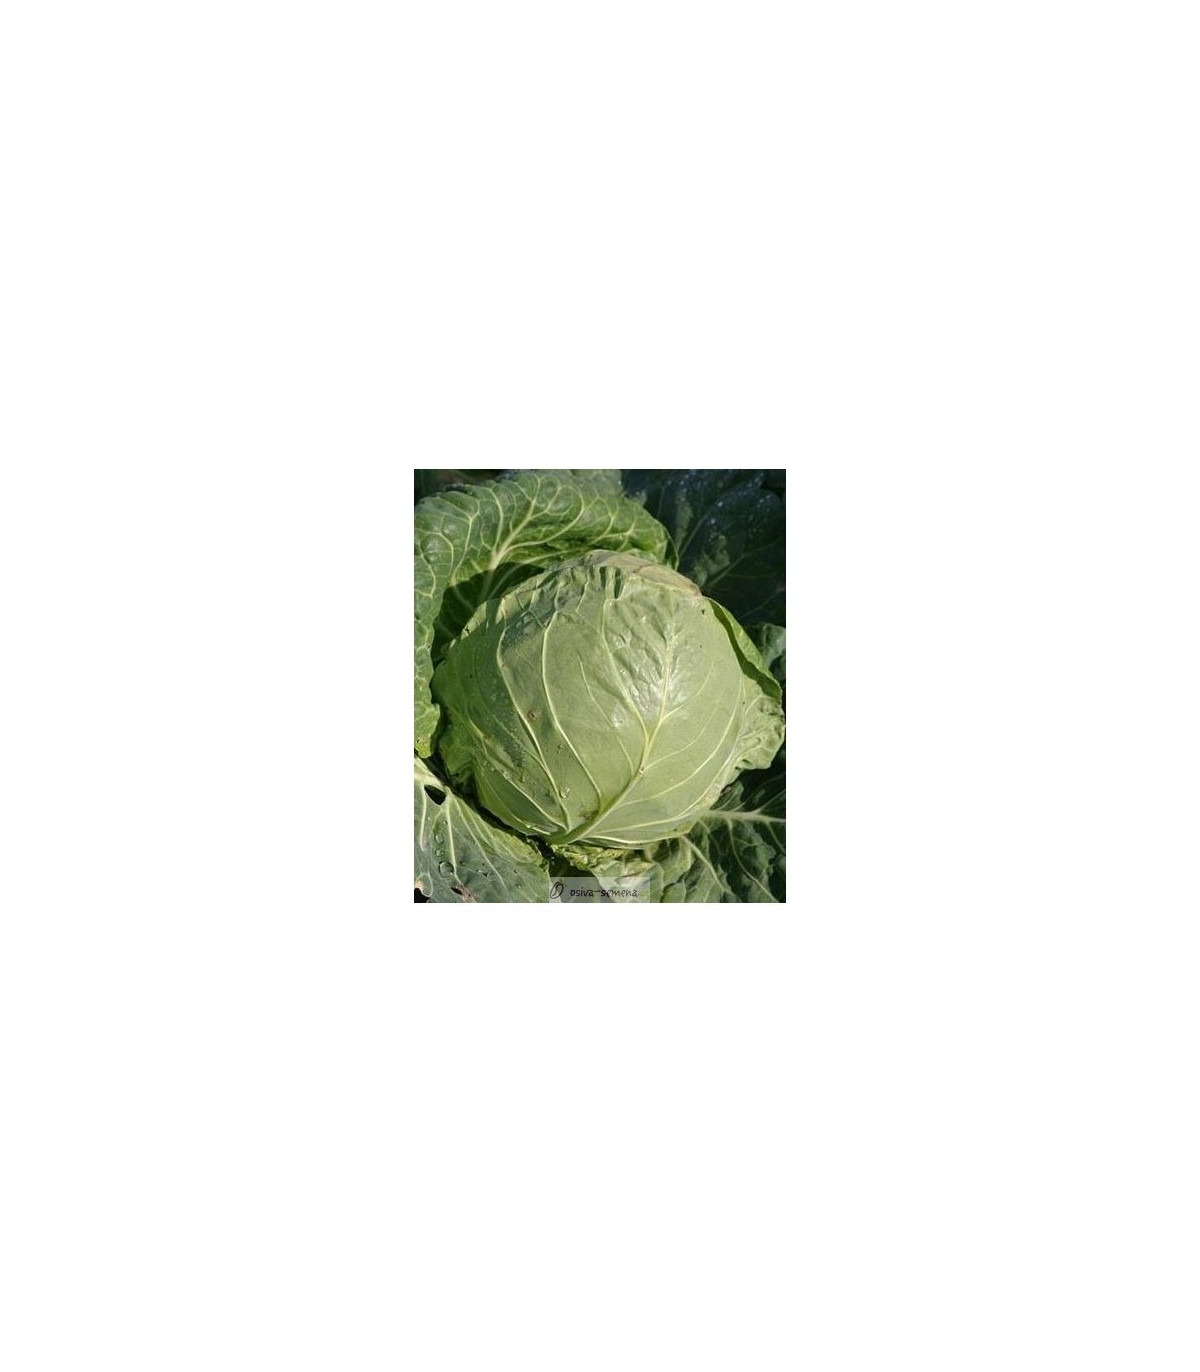 BIO Biela kapusta Premier - Brassica oleracea - bio semená kapusty - 0,3 g